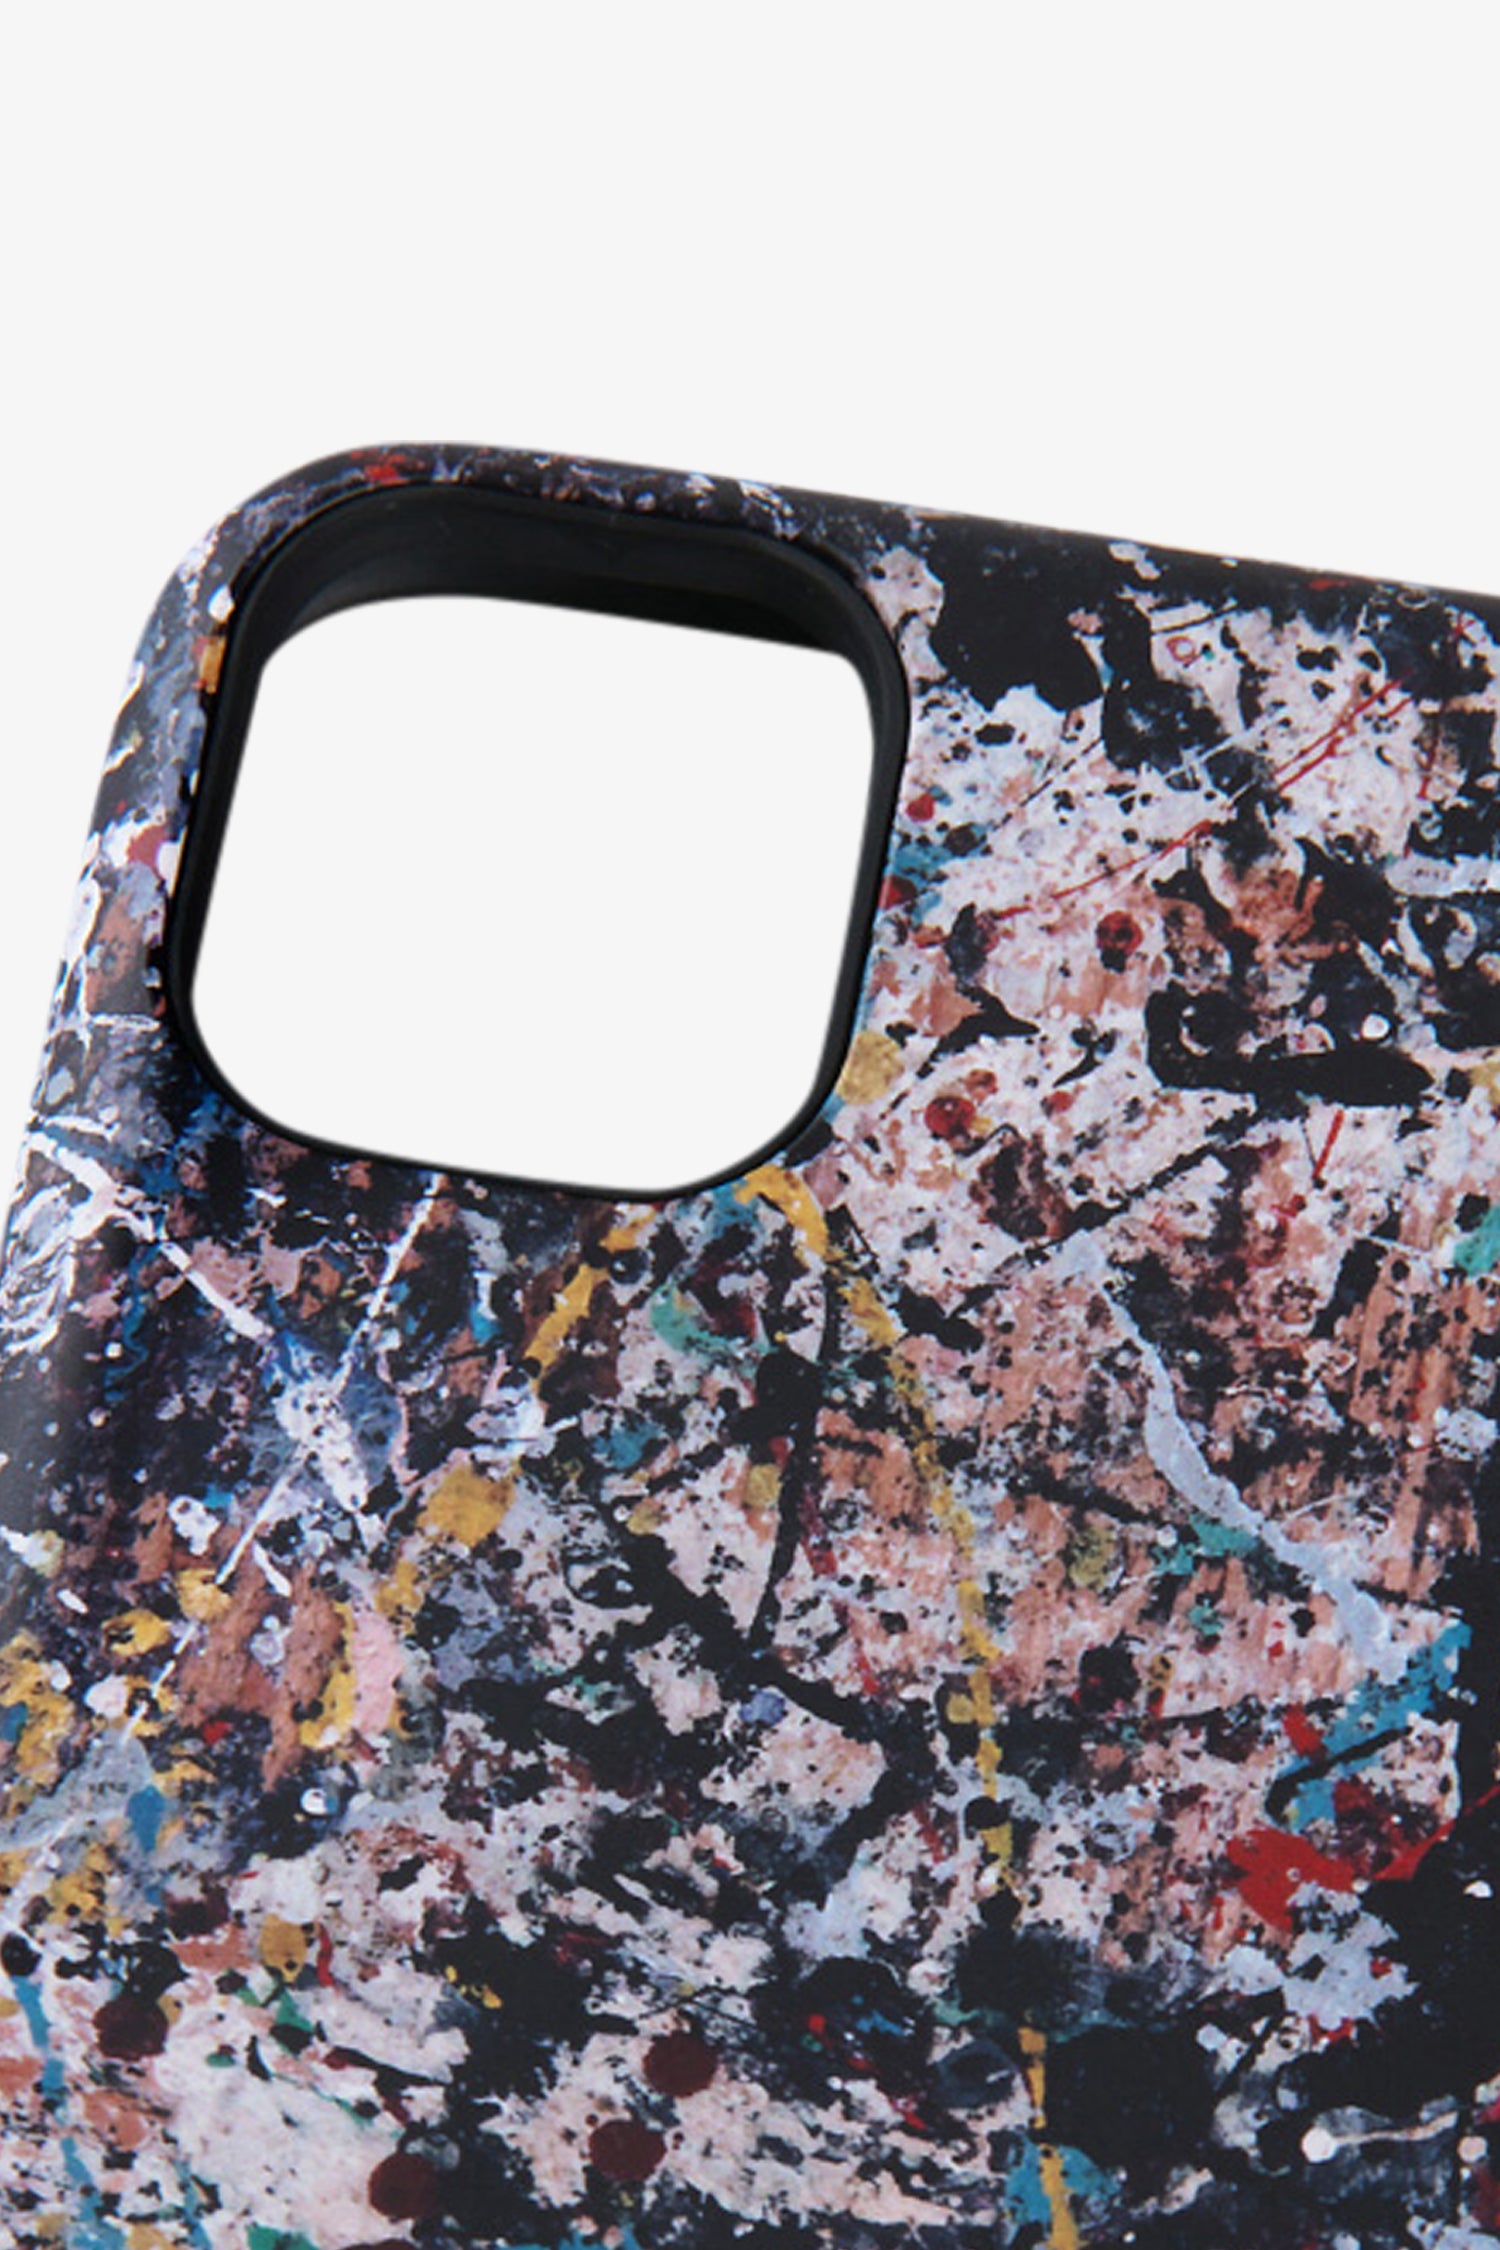 Selectshop FRAME - SYNC. Jackson Pollock Studio IPhone 11 Case Accessories Dubai